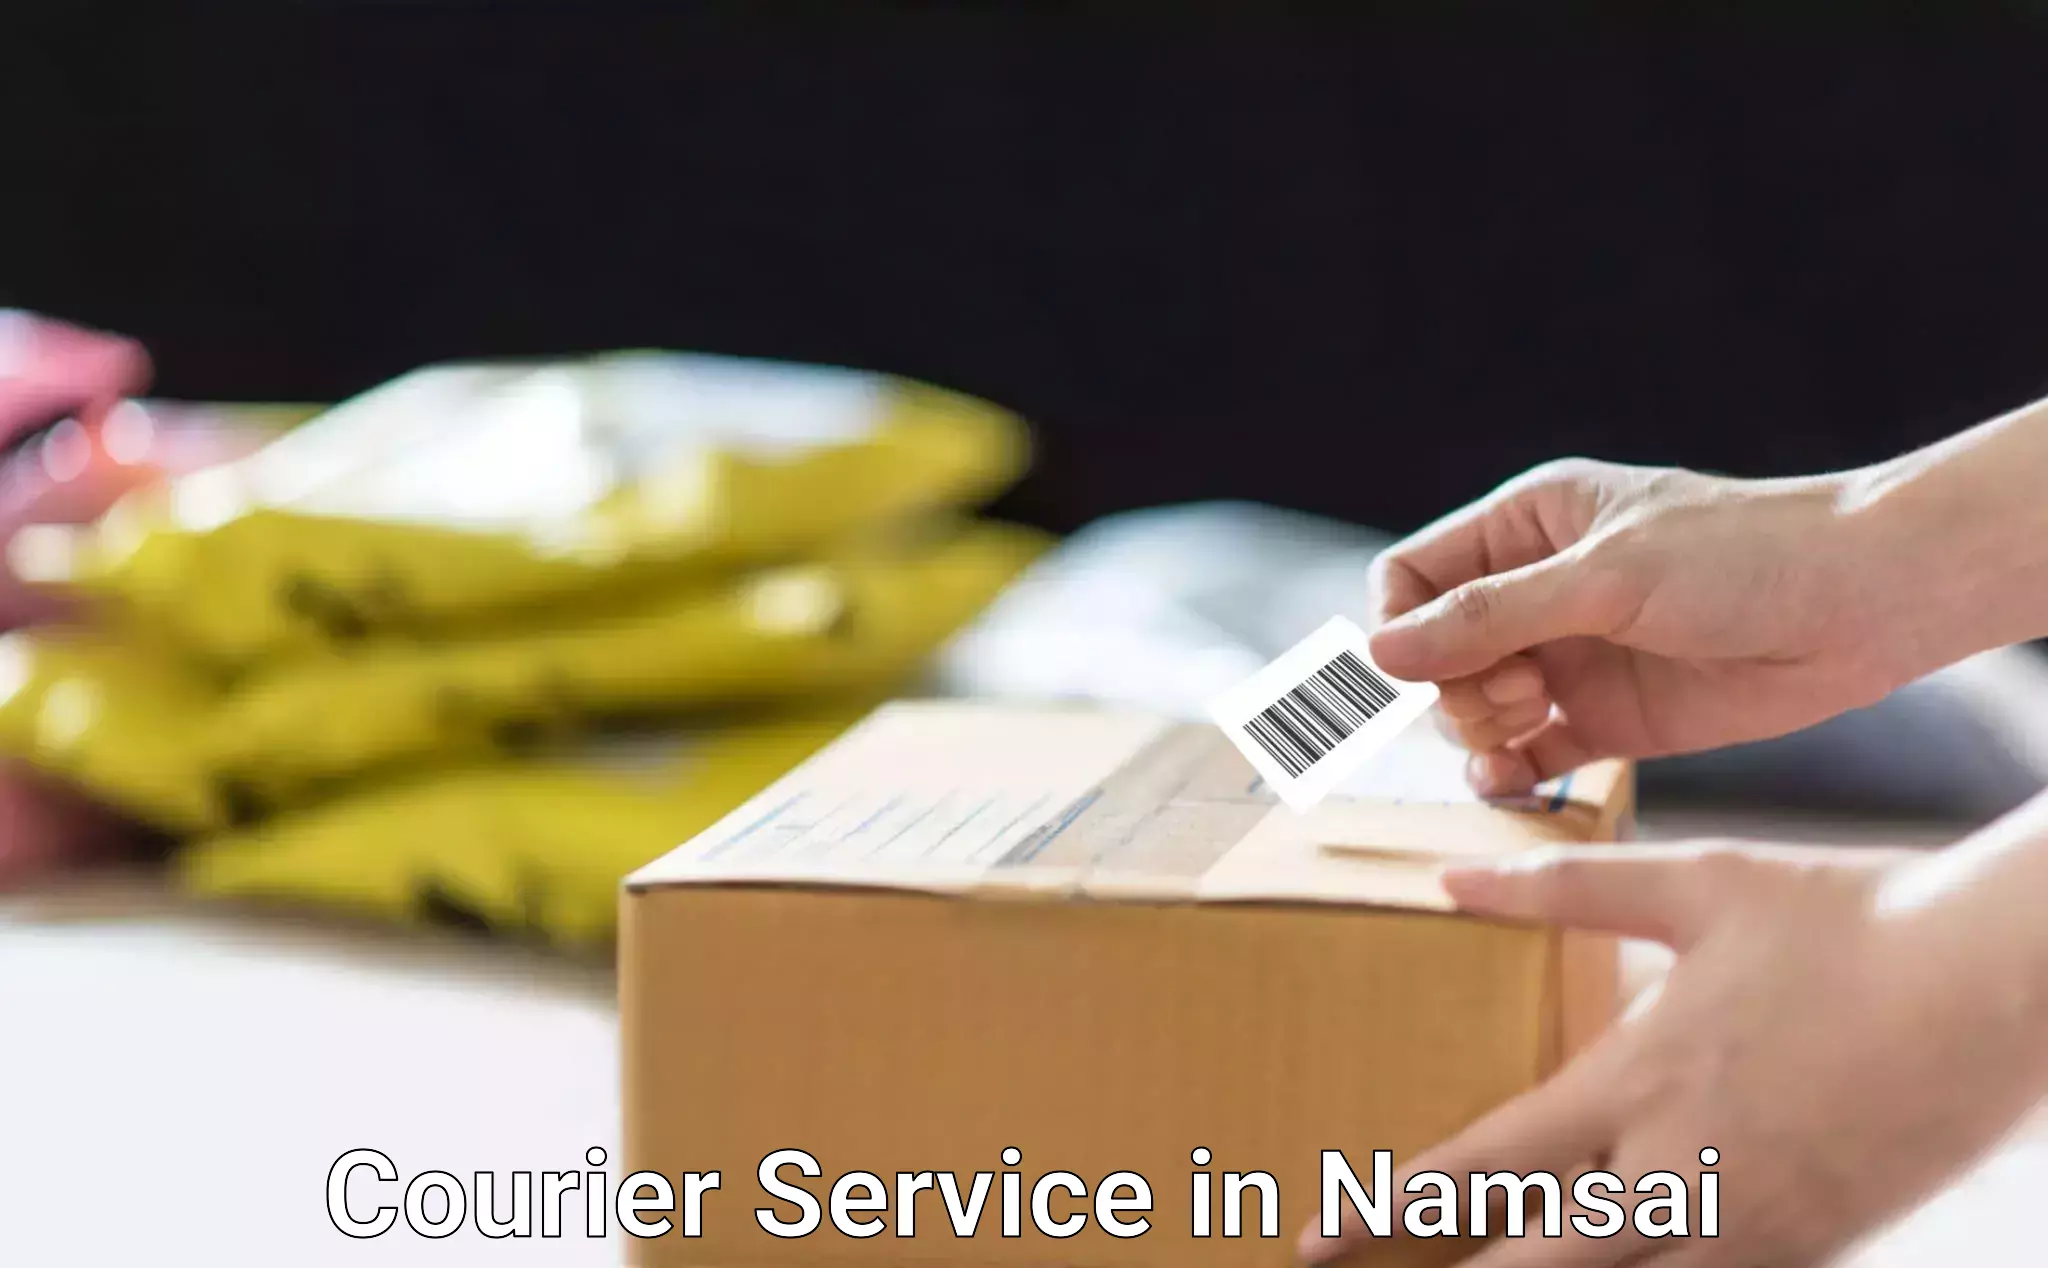 Fast delivery service in Namsai